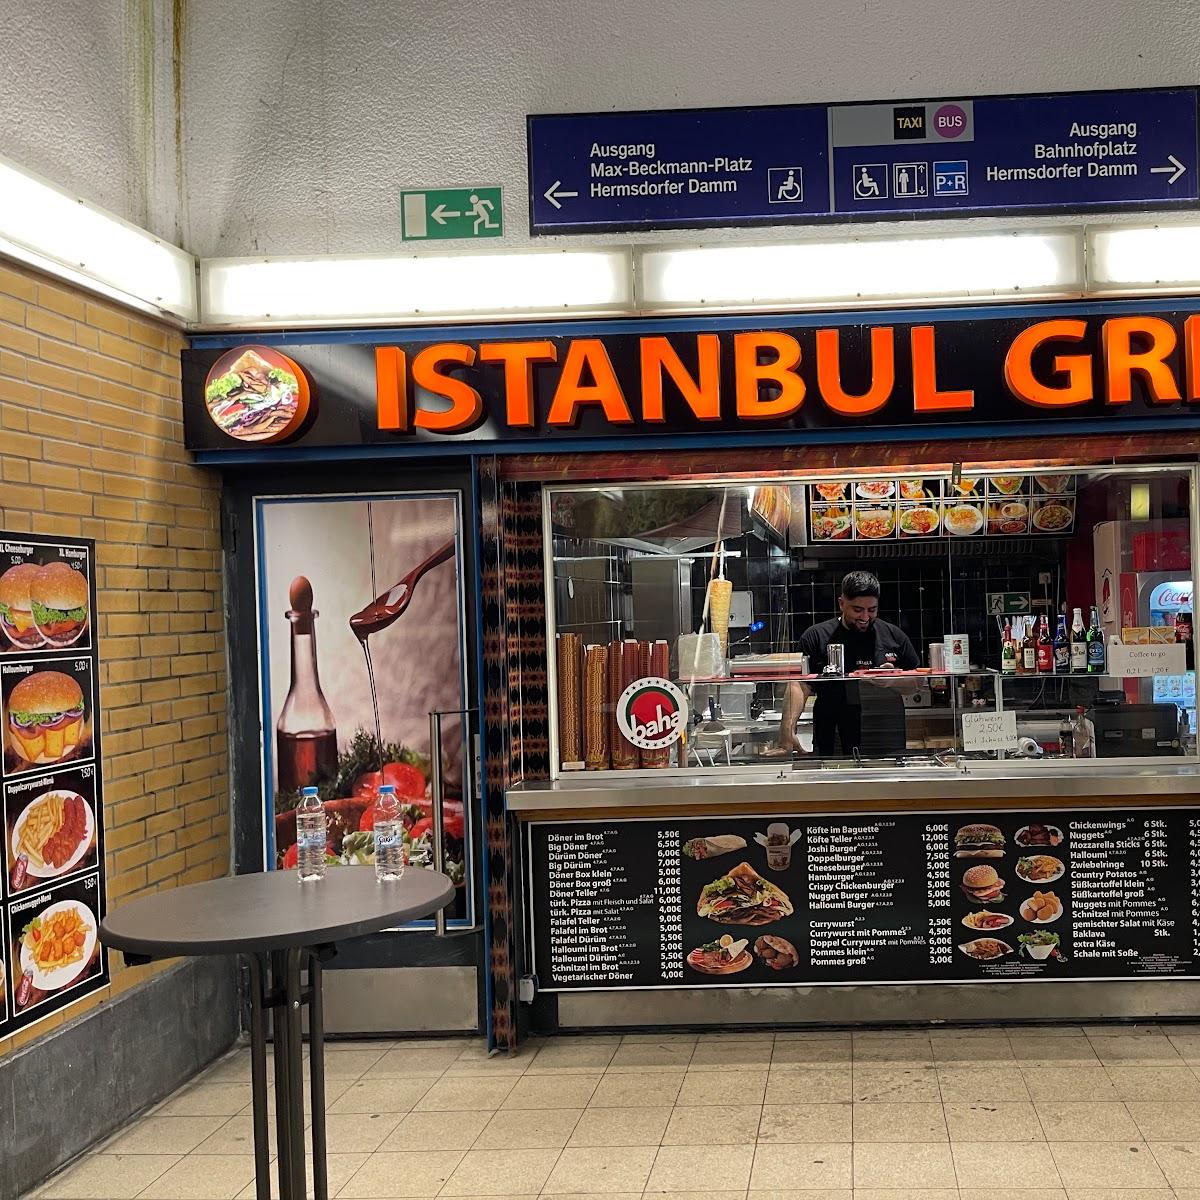 Restaurant "Istanbul Kebab" in Berlin